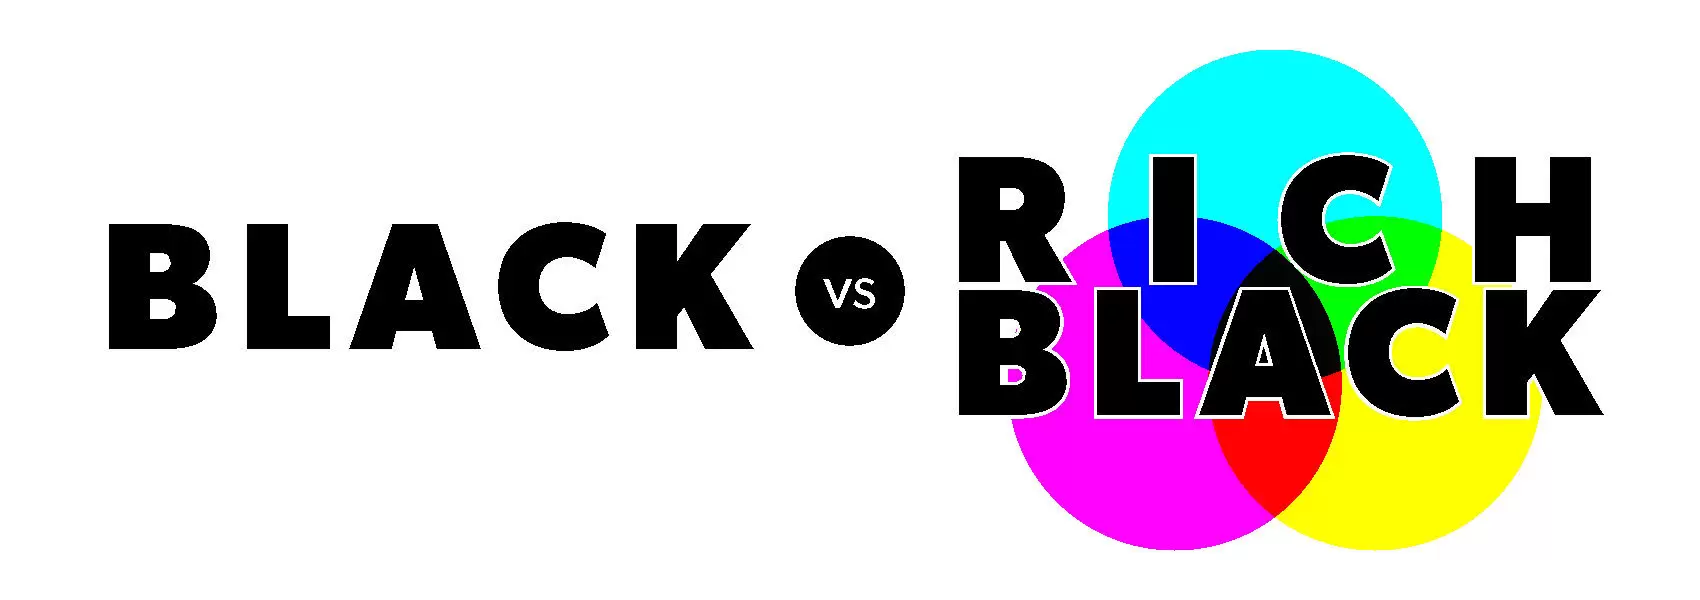 Standard Black vs Rich Black